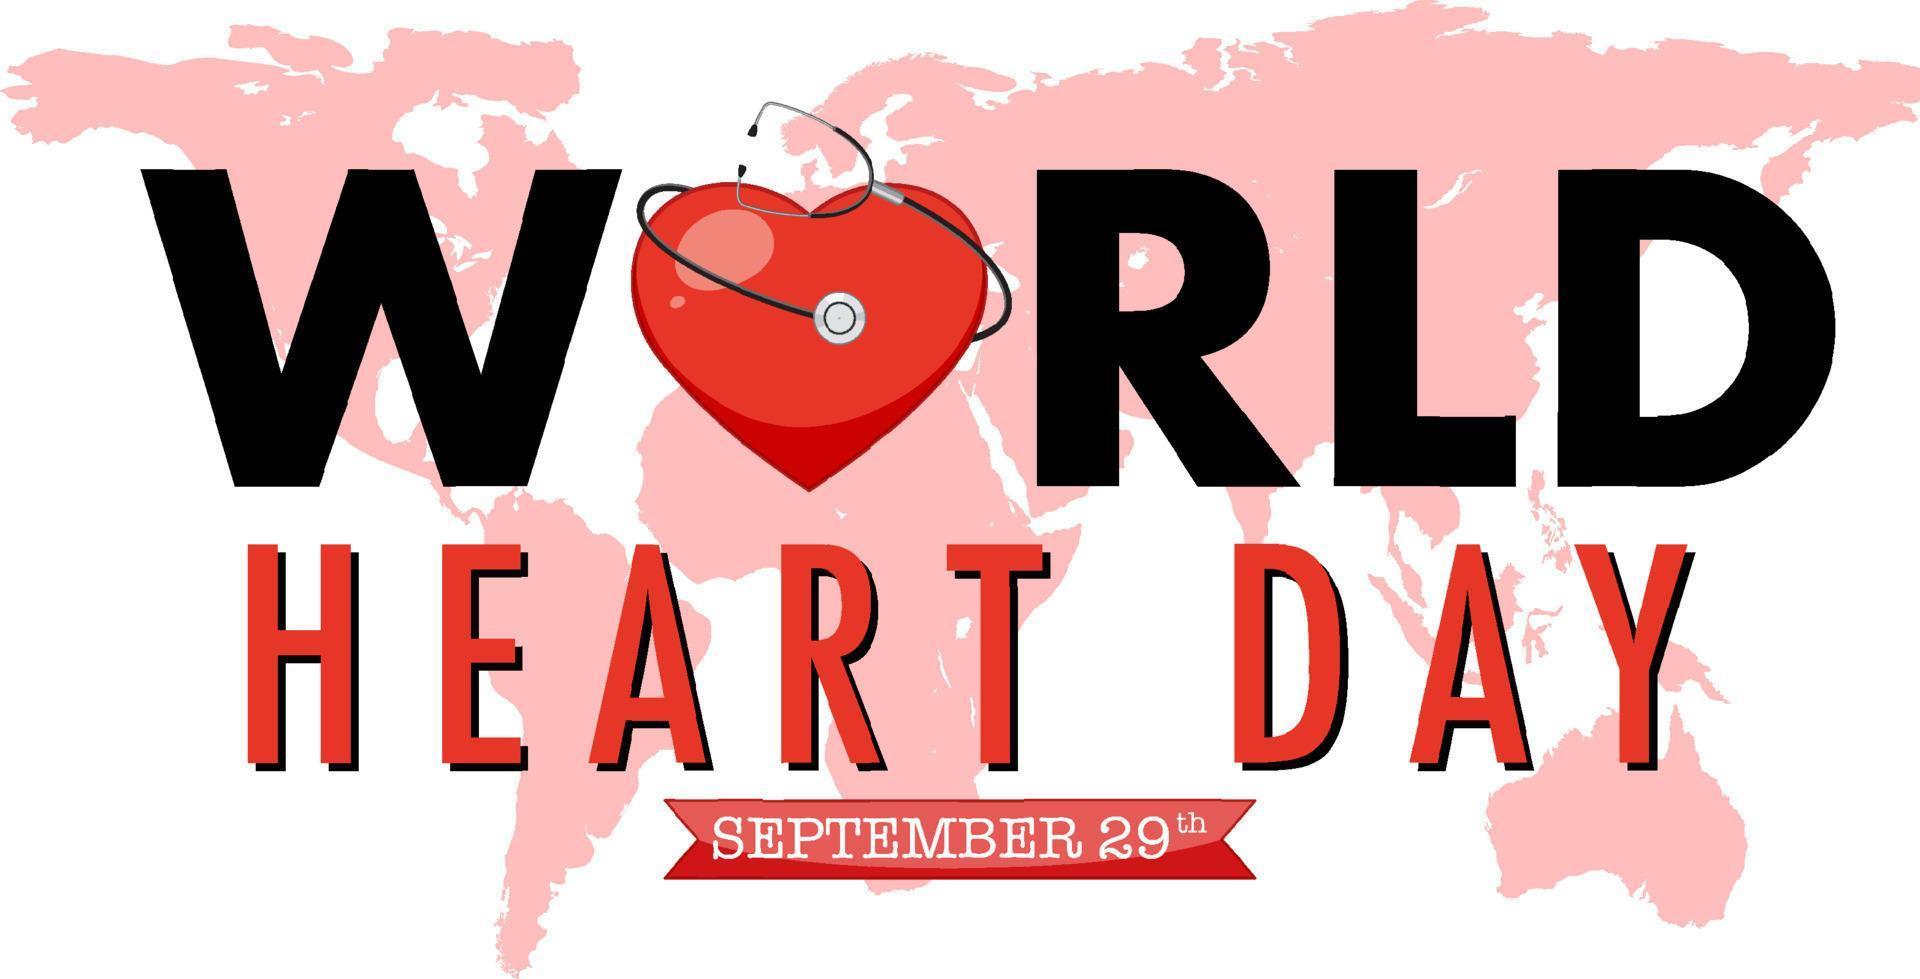 World Heart Day Banner Design vector